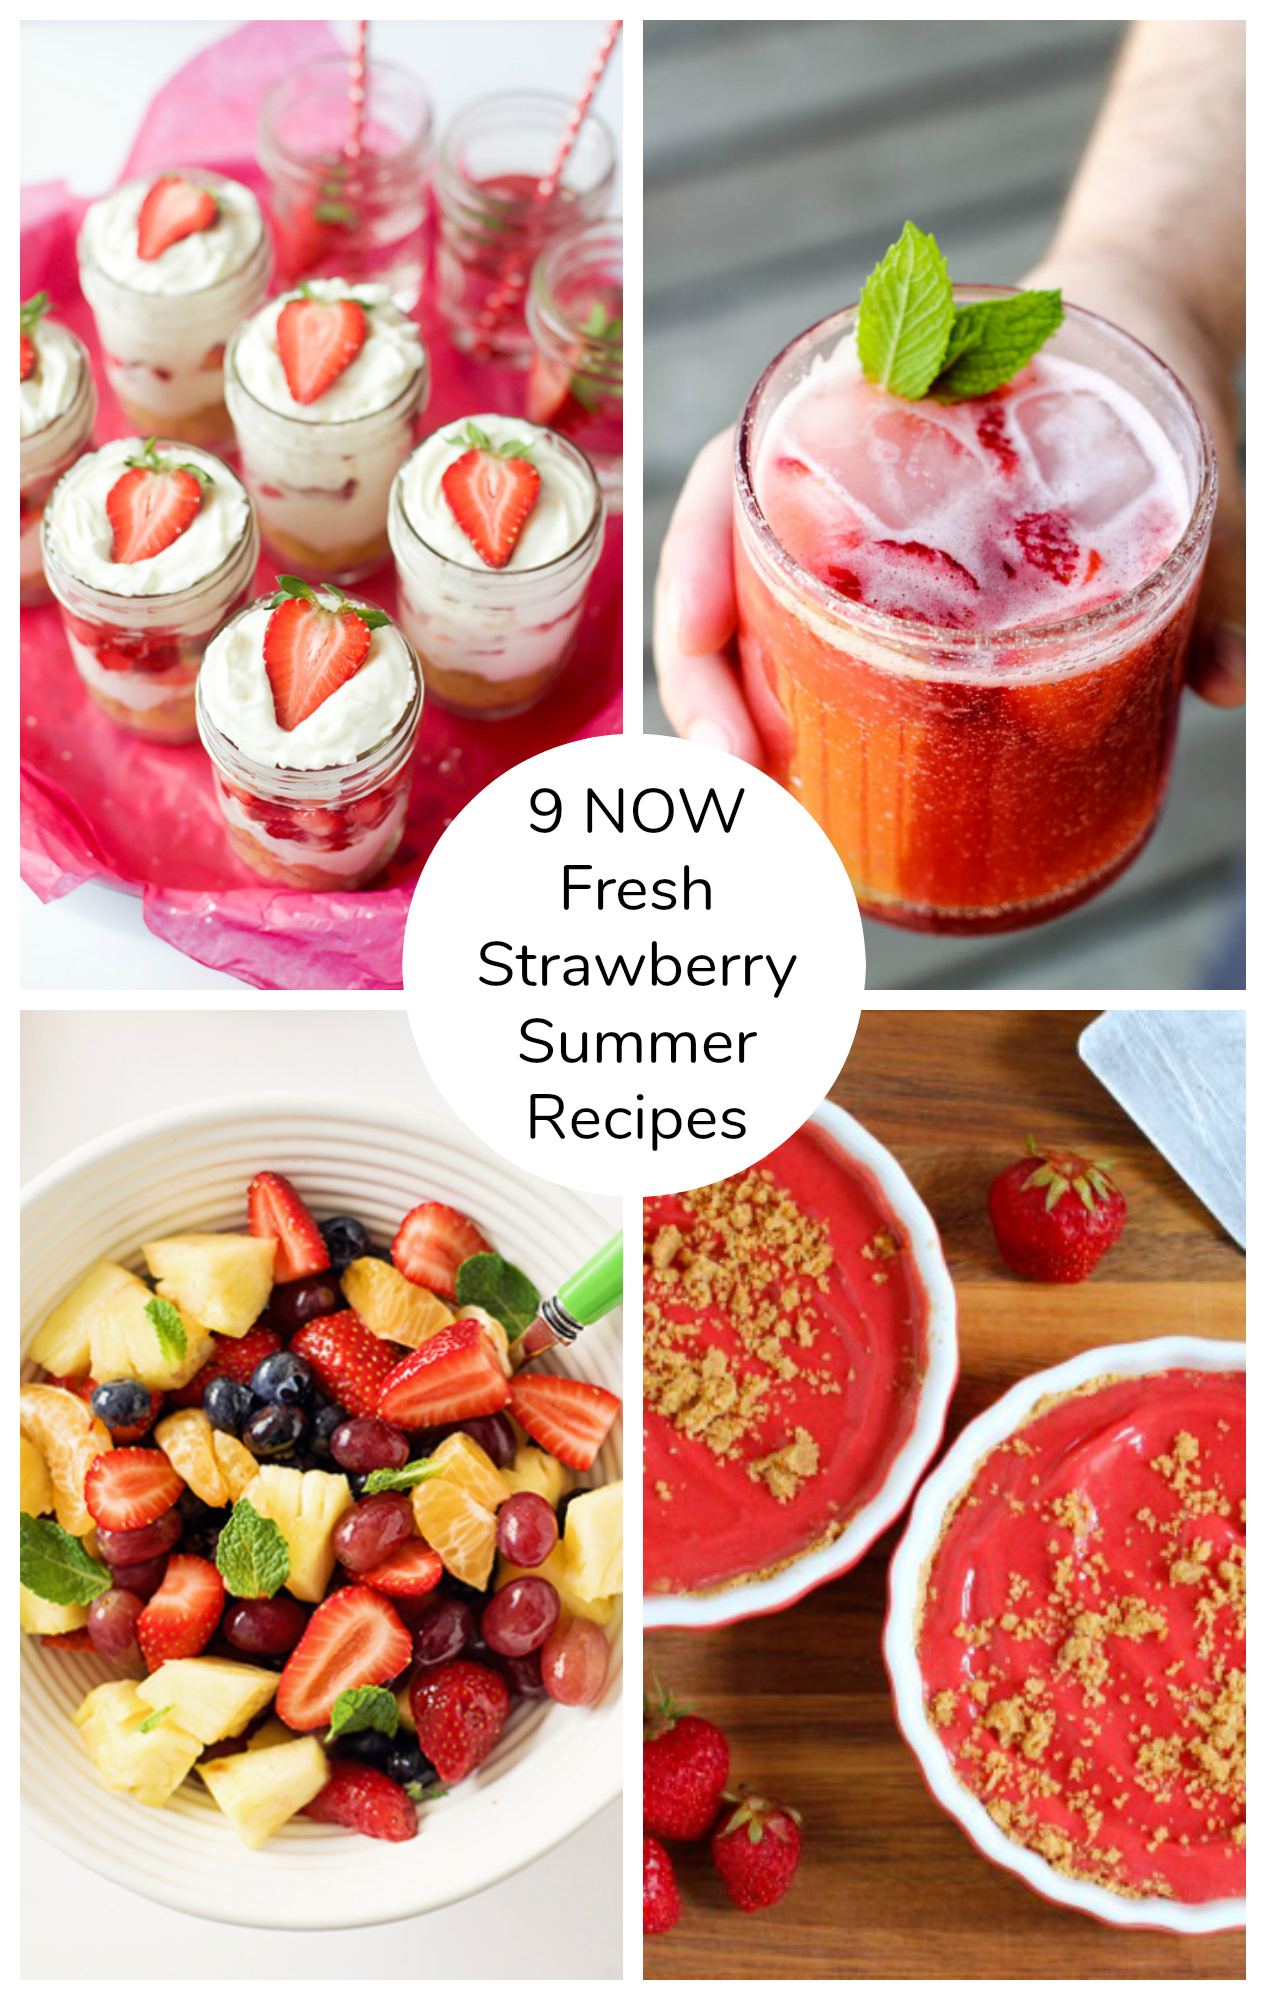 9 NOW Fresh Strawberry Summer Recipes